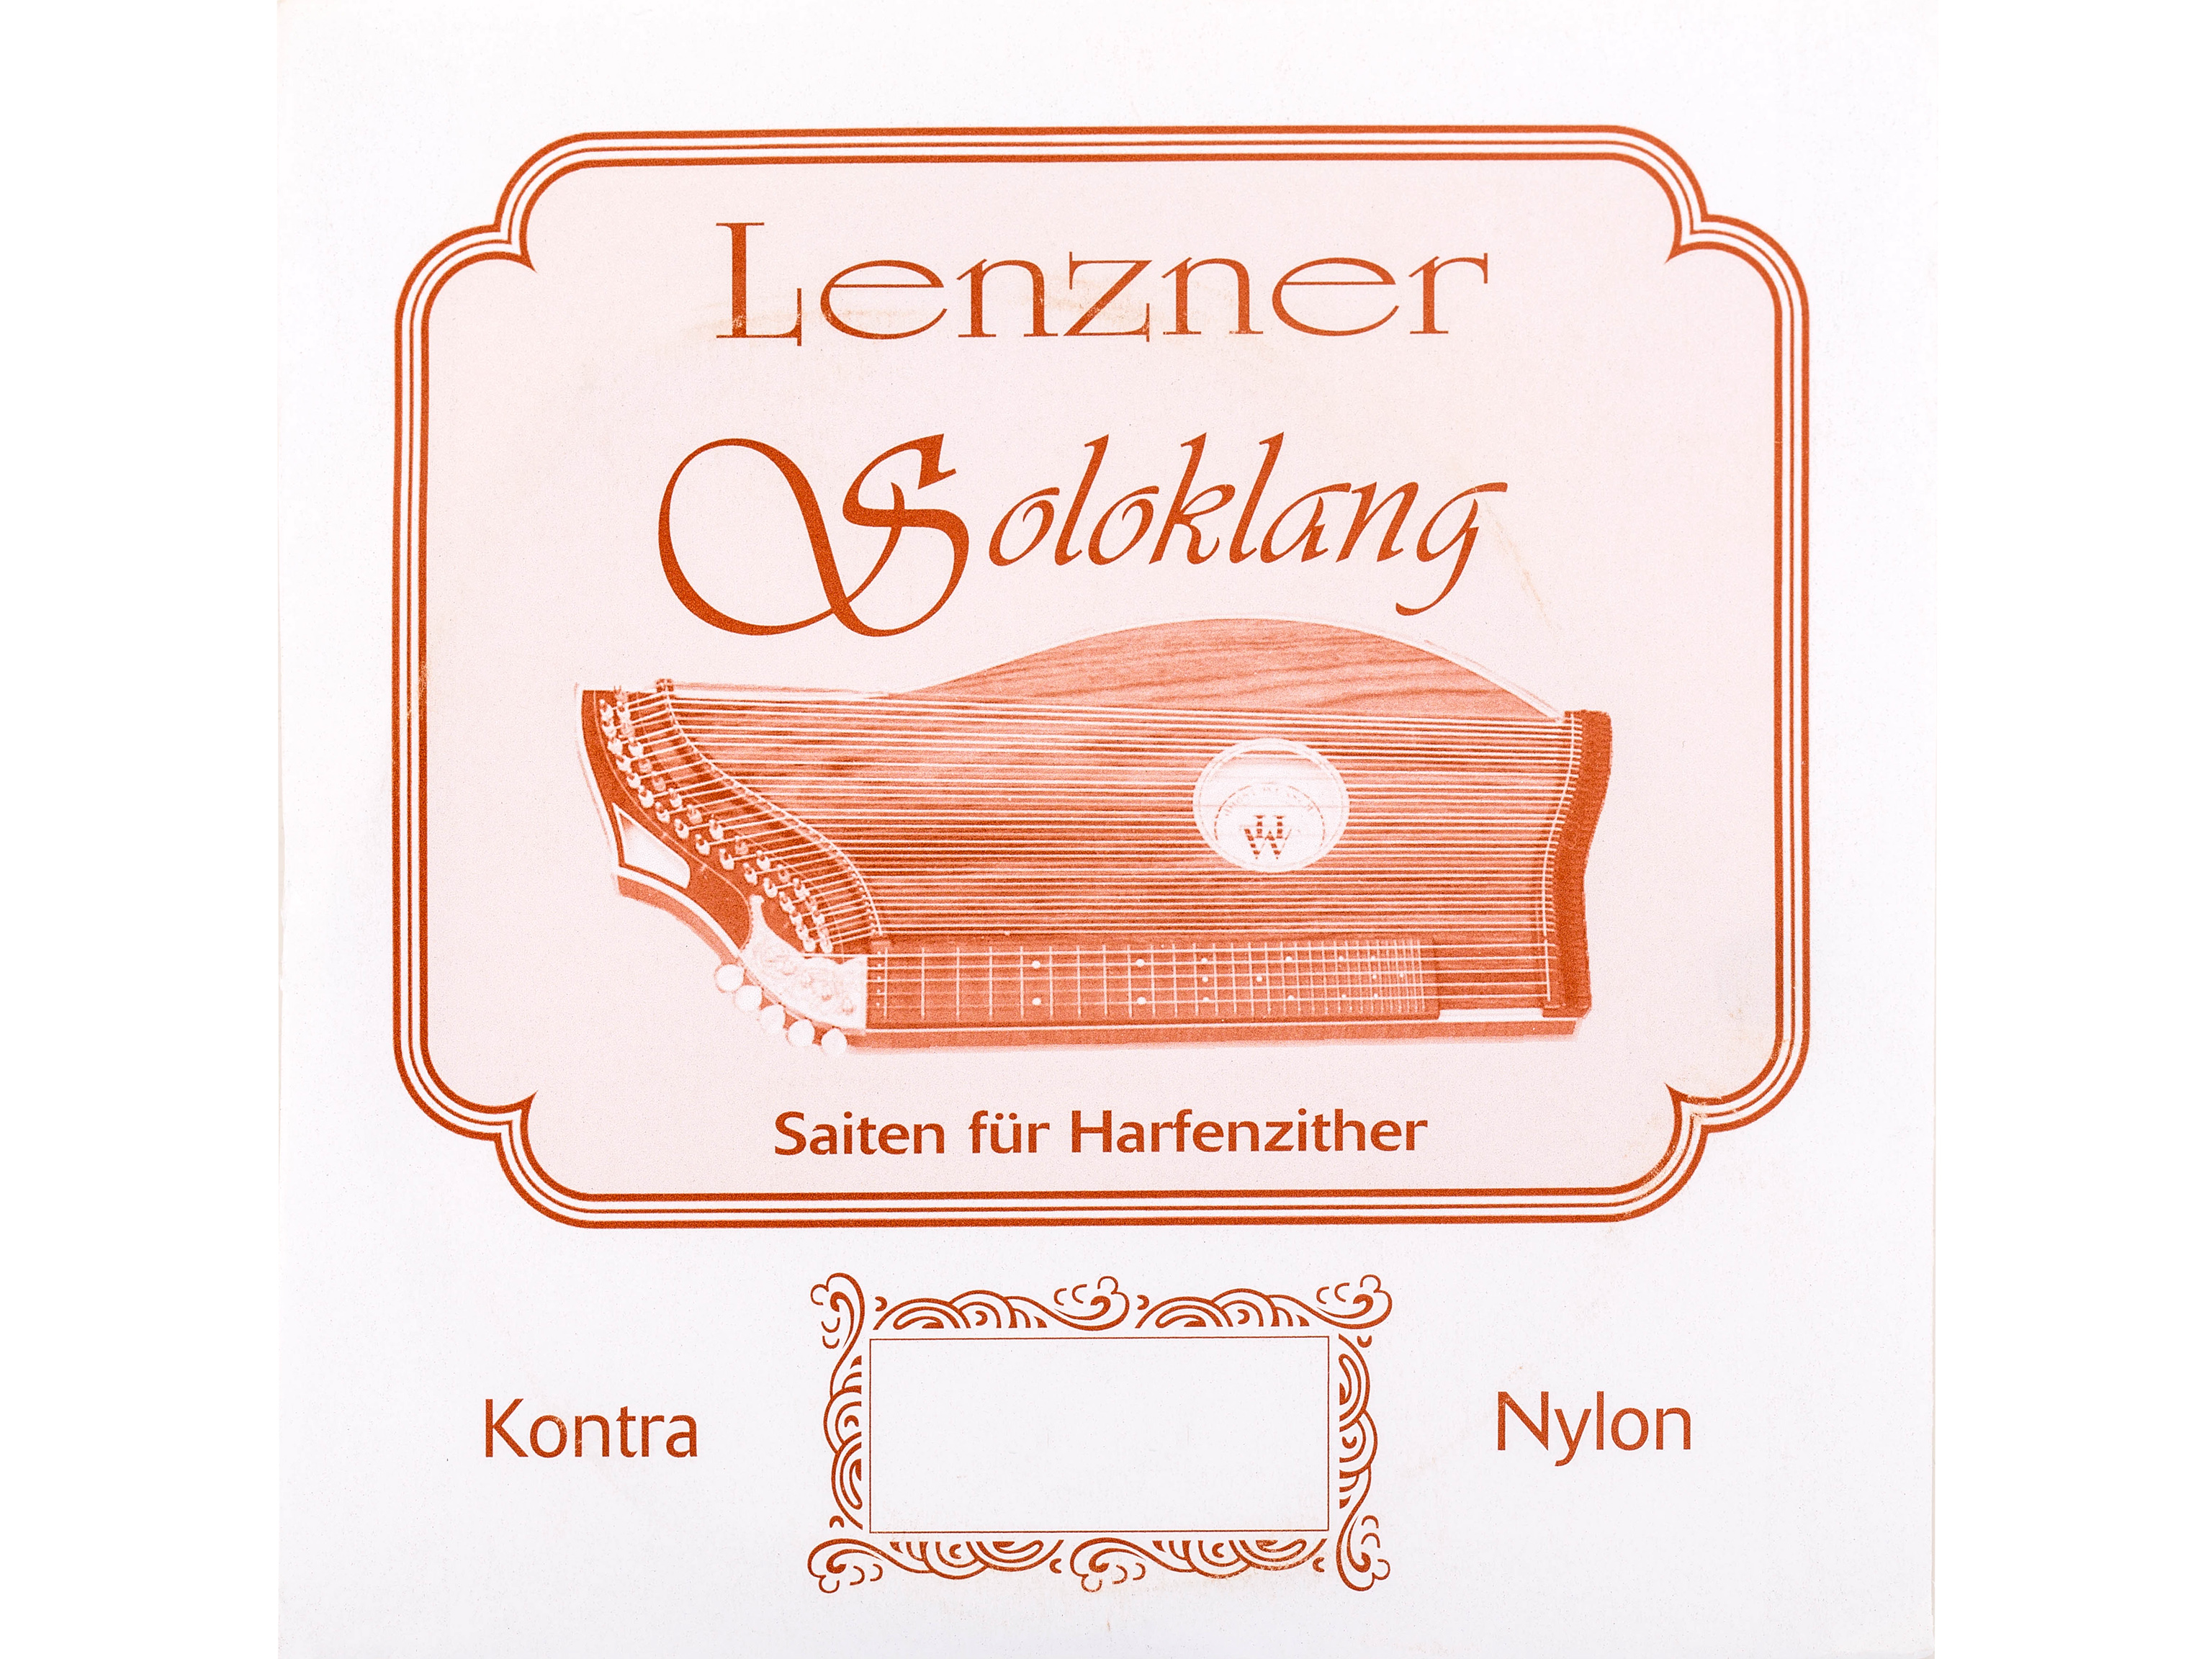 Lenzner 36. Fis Zithersaite Soloklang Kontra